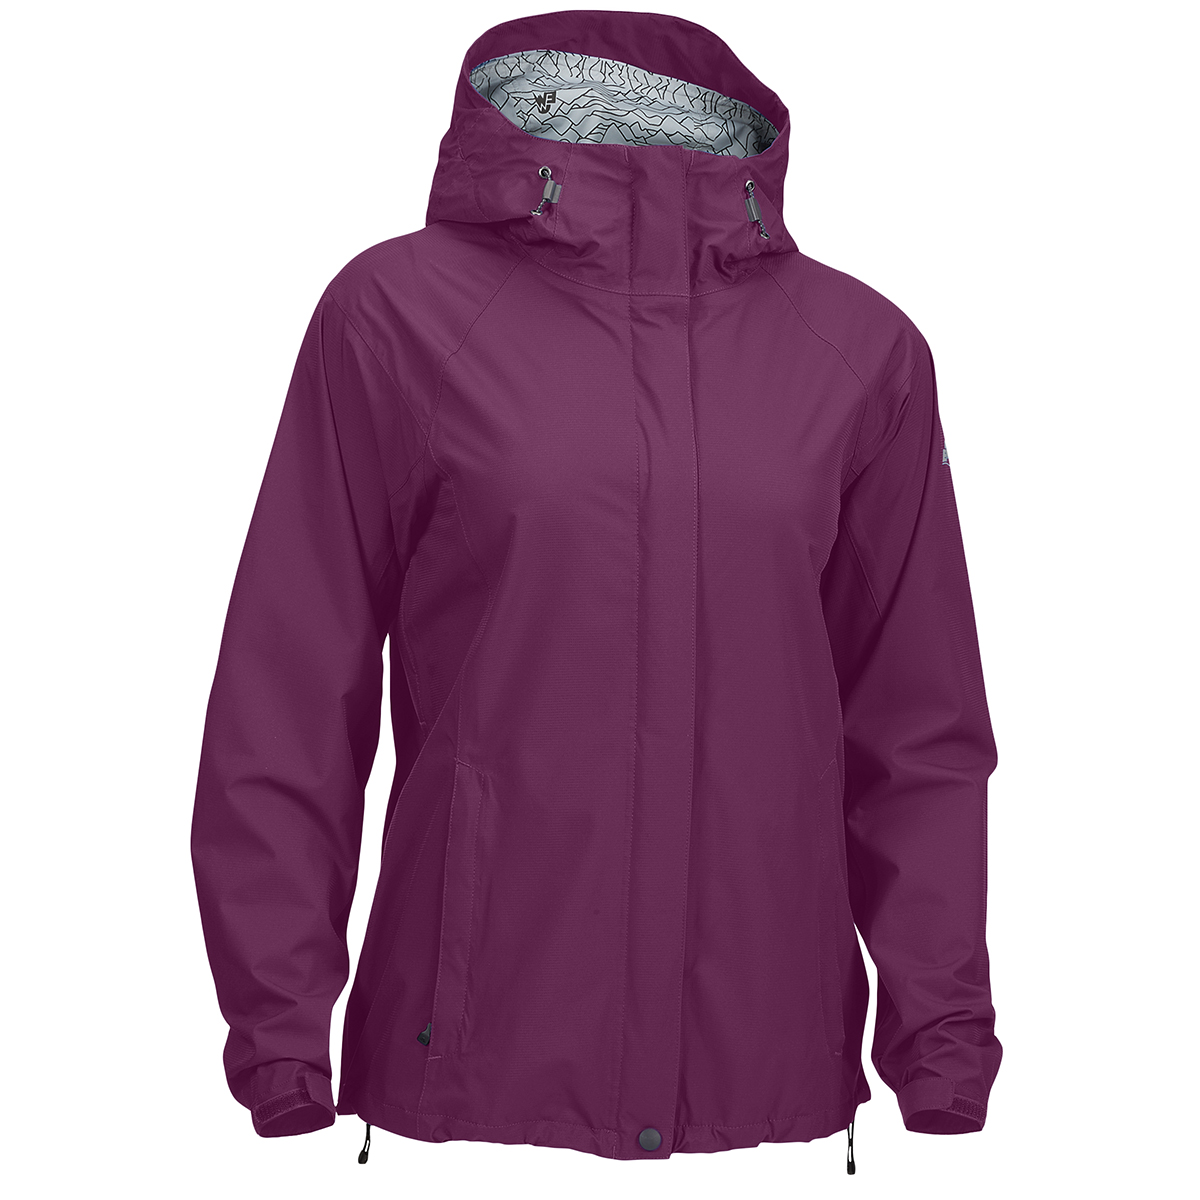 Ems Women's Thunderhead Peak Rain Jacket - Purple, XS